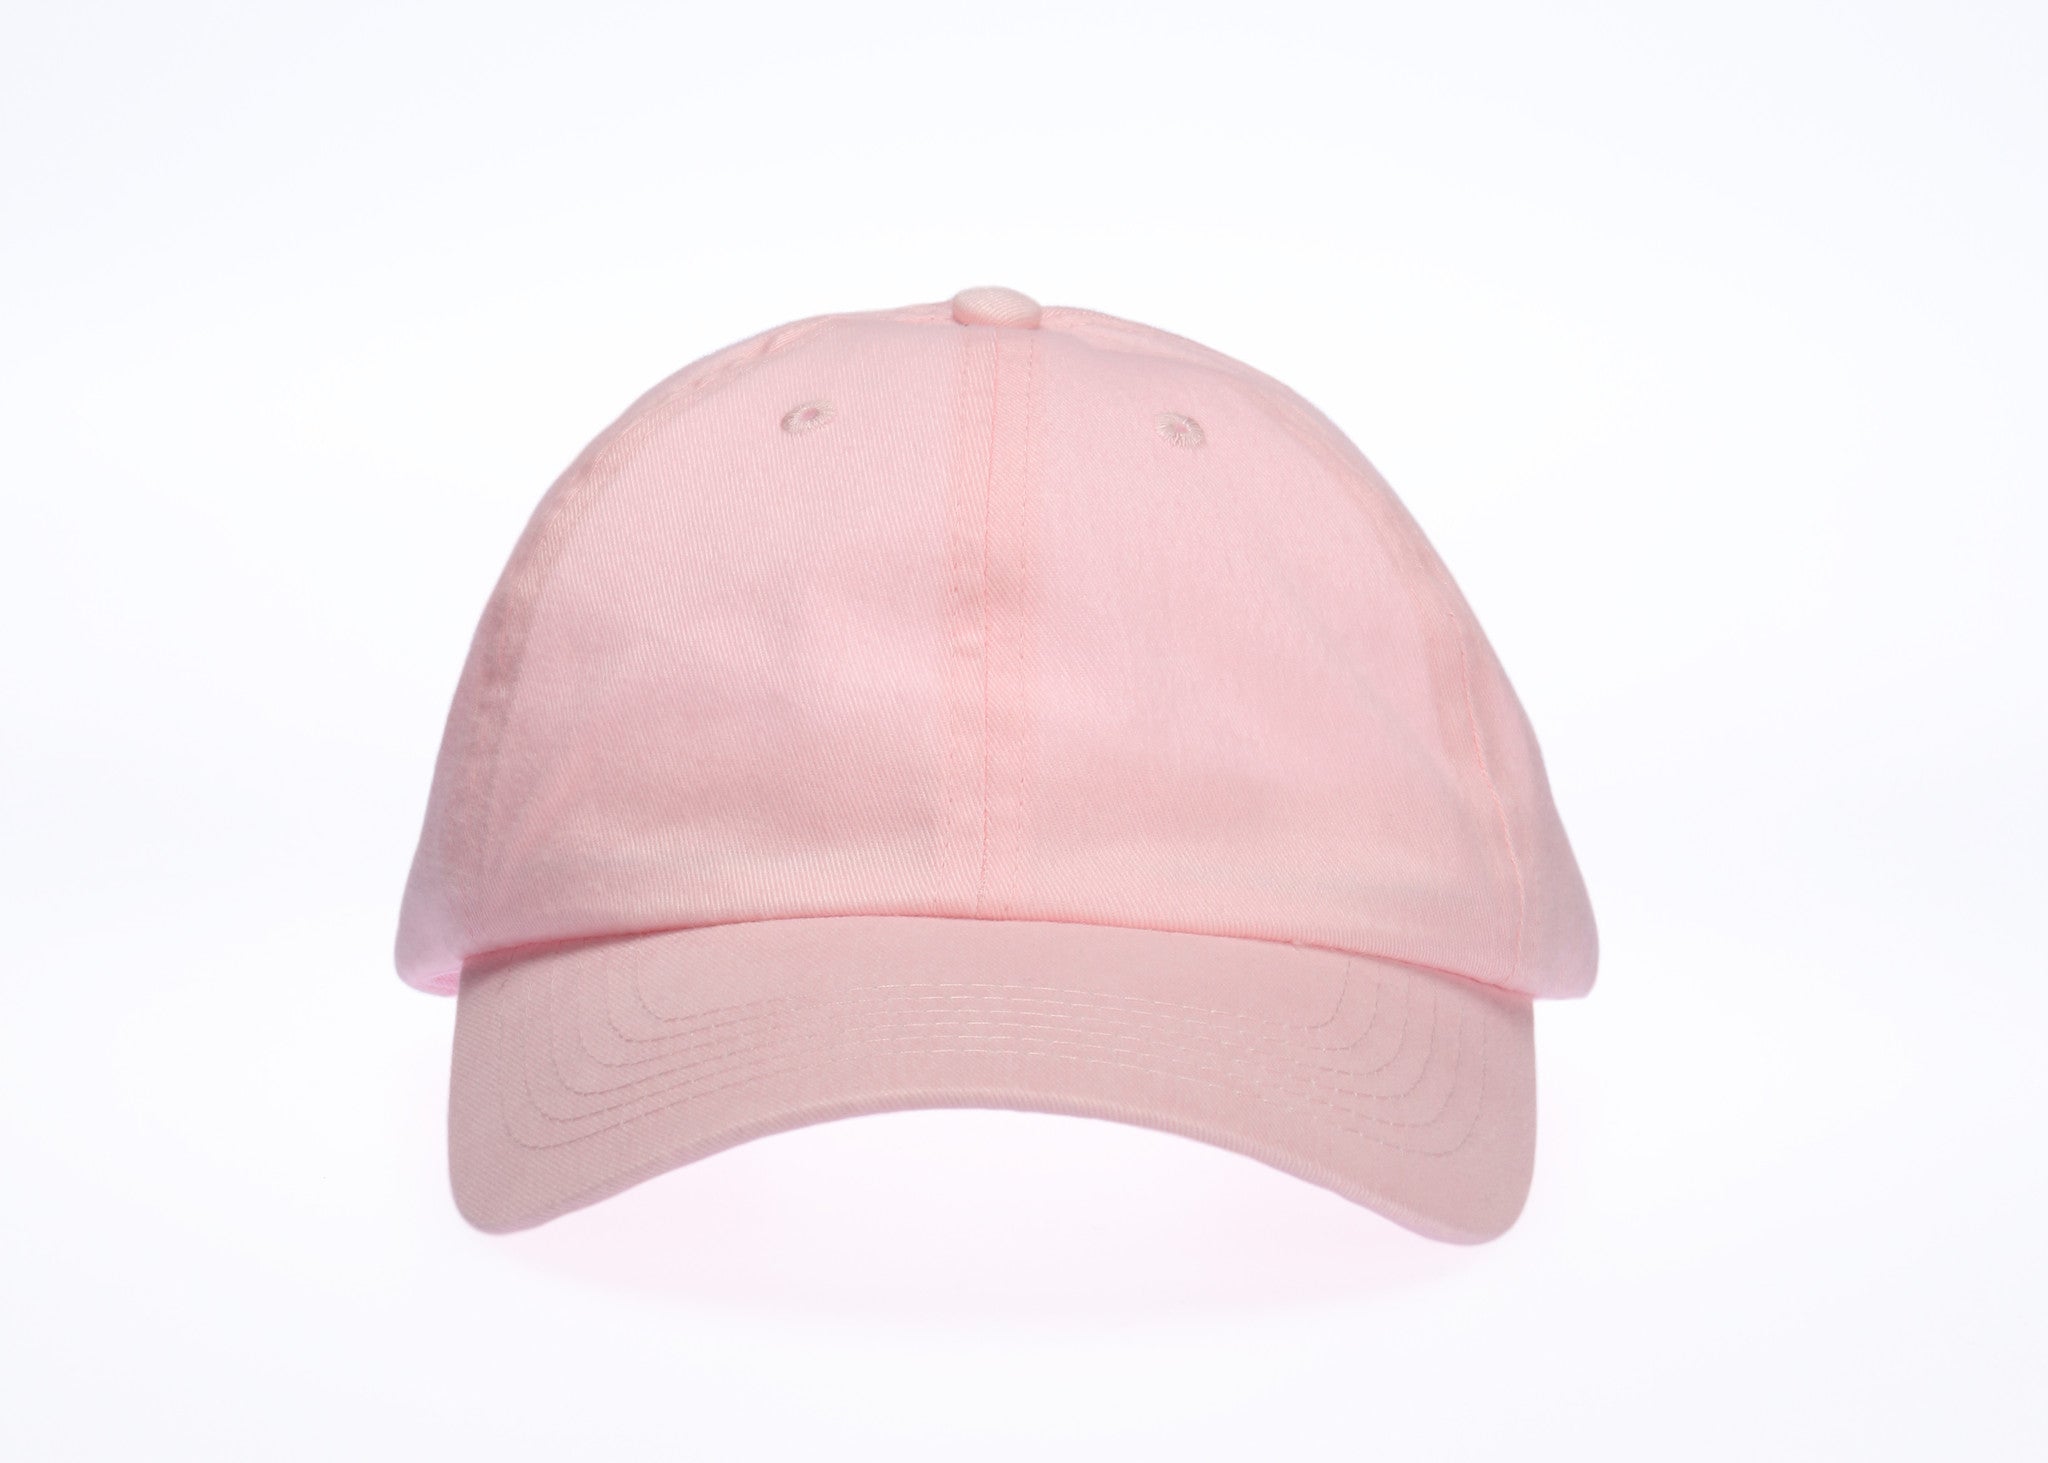 Spony Ponytail Baseball Cap - Wear it 2 Ways!! Pink Minx